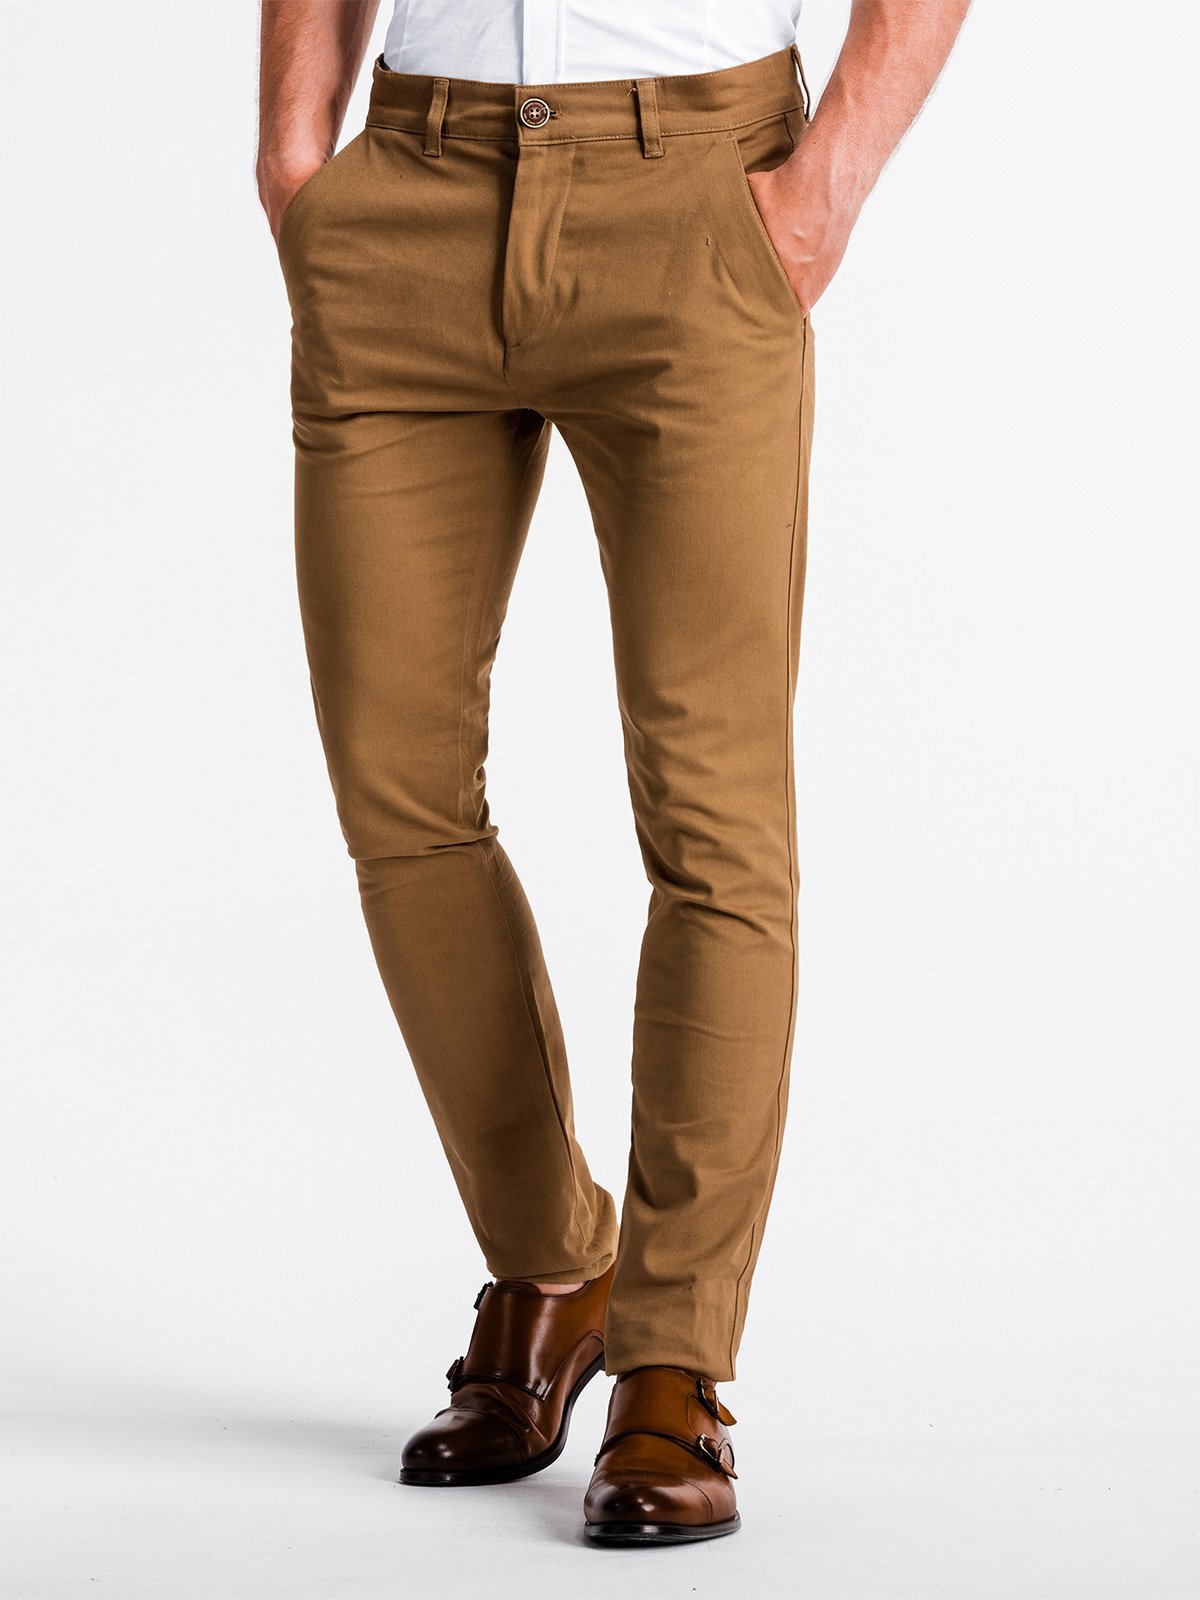 Men's pants chinos - camel P830  MODONE wholesale - Clothing For Men